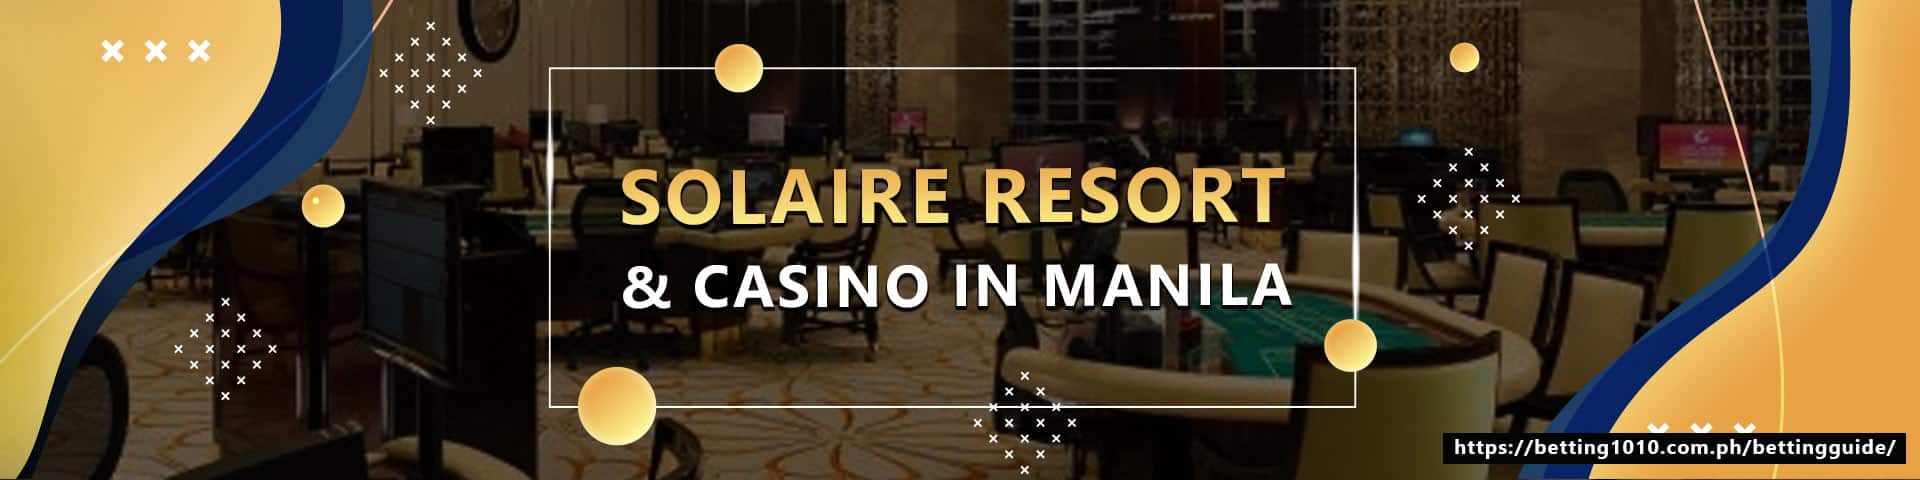 Solaire Resort & Casino in Manila